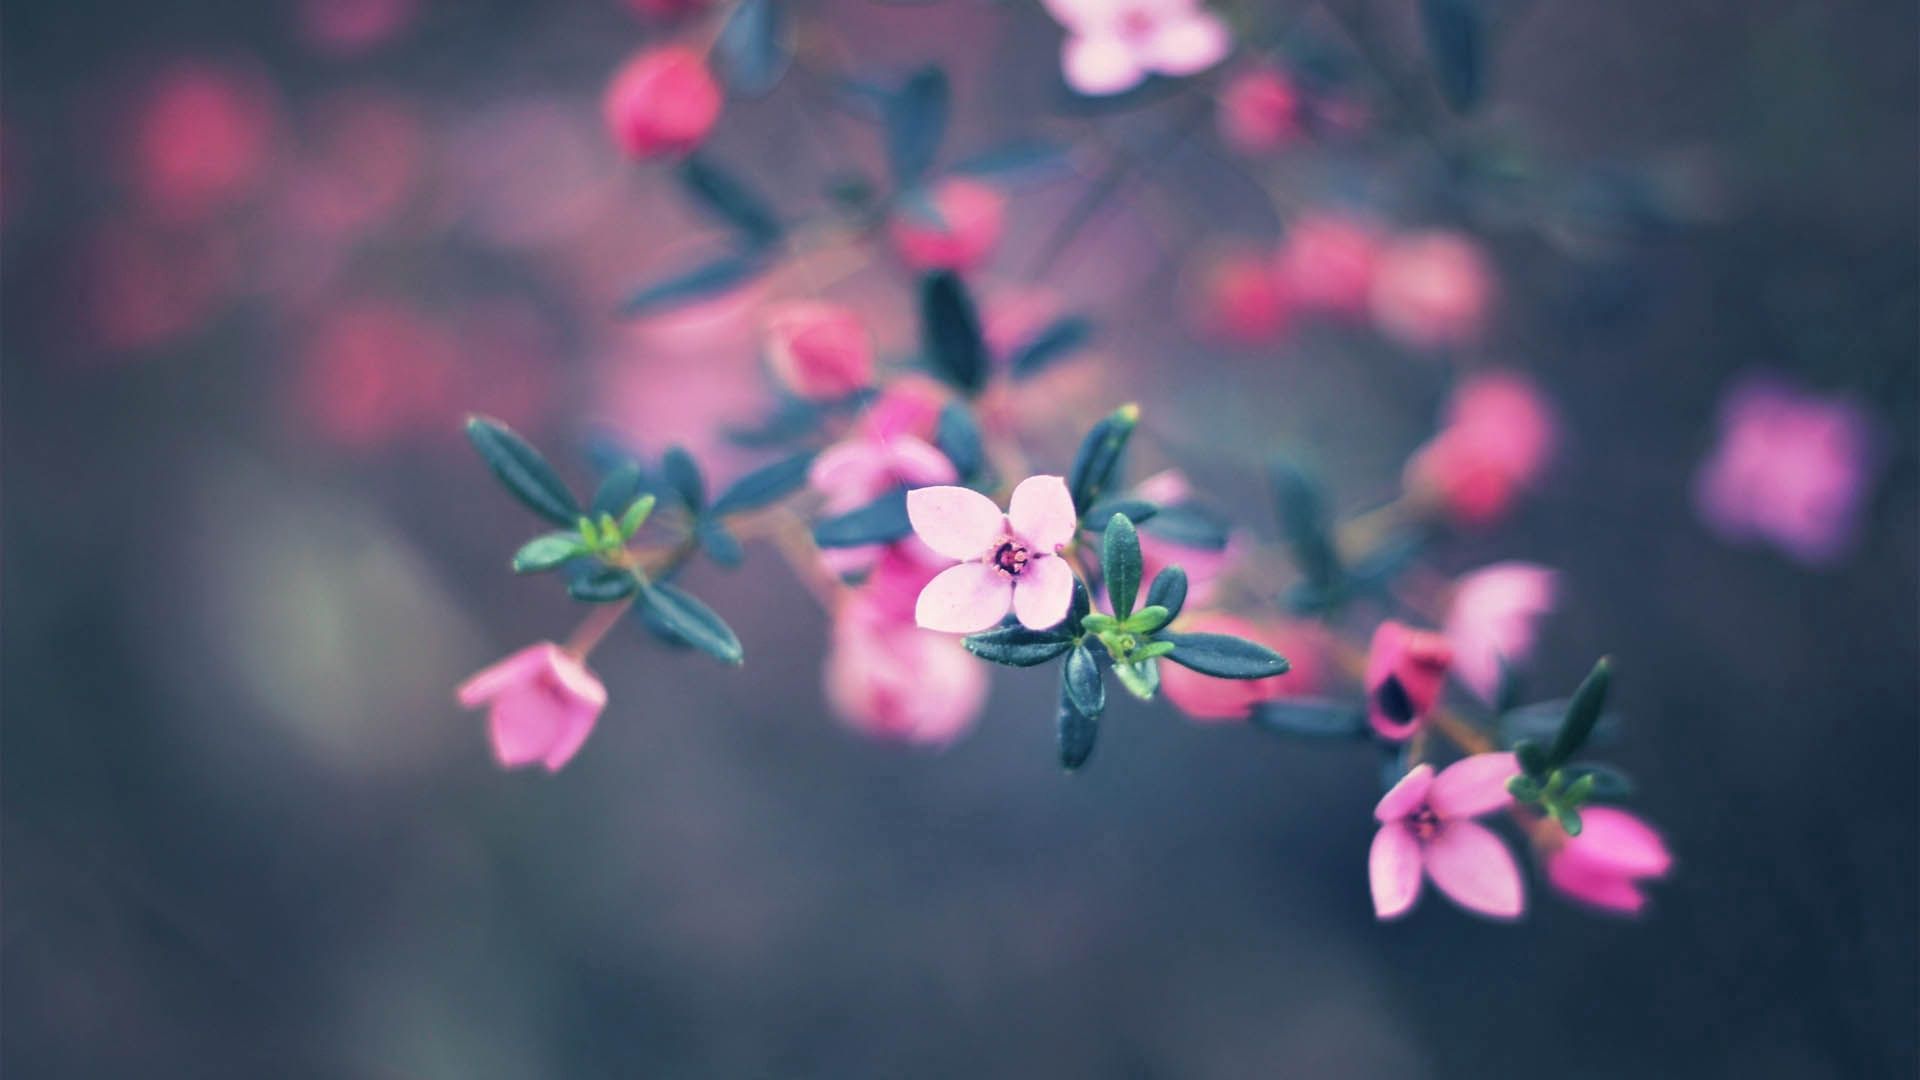 Download wallpaper 1920x1080 flowers, bloom, blur HD background